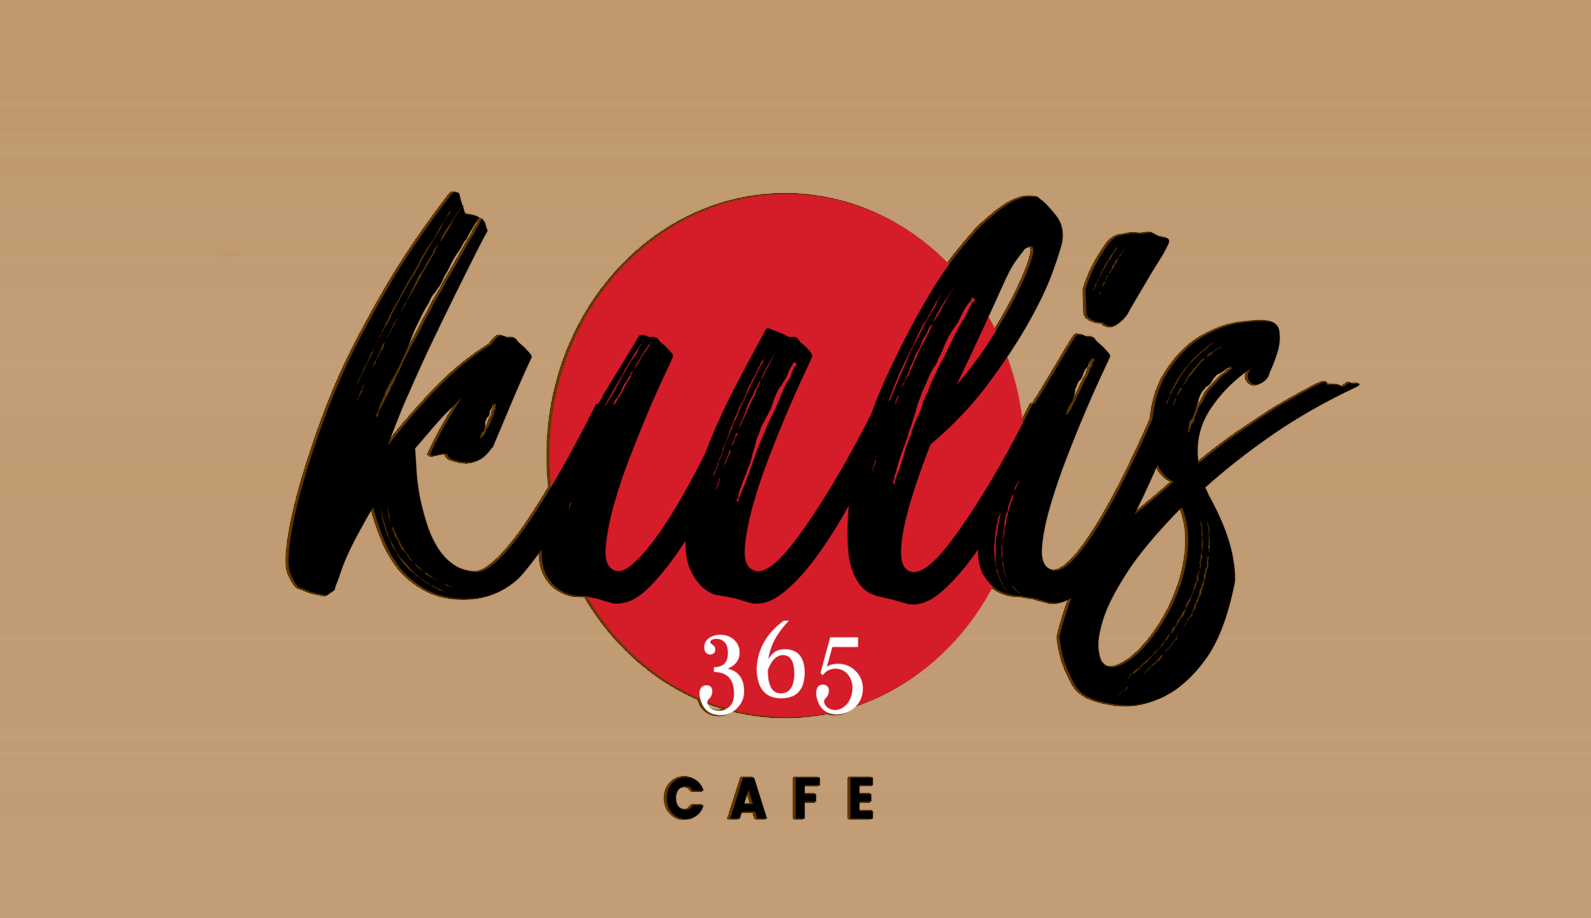 Kulis Cafe